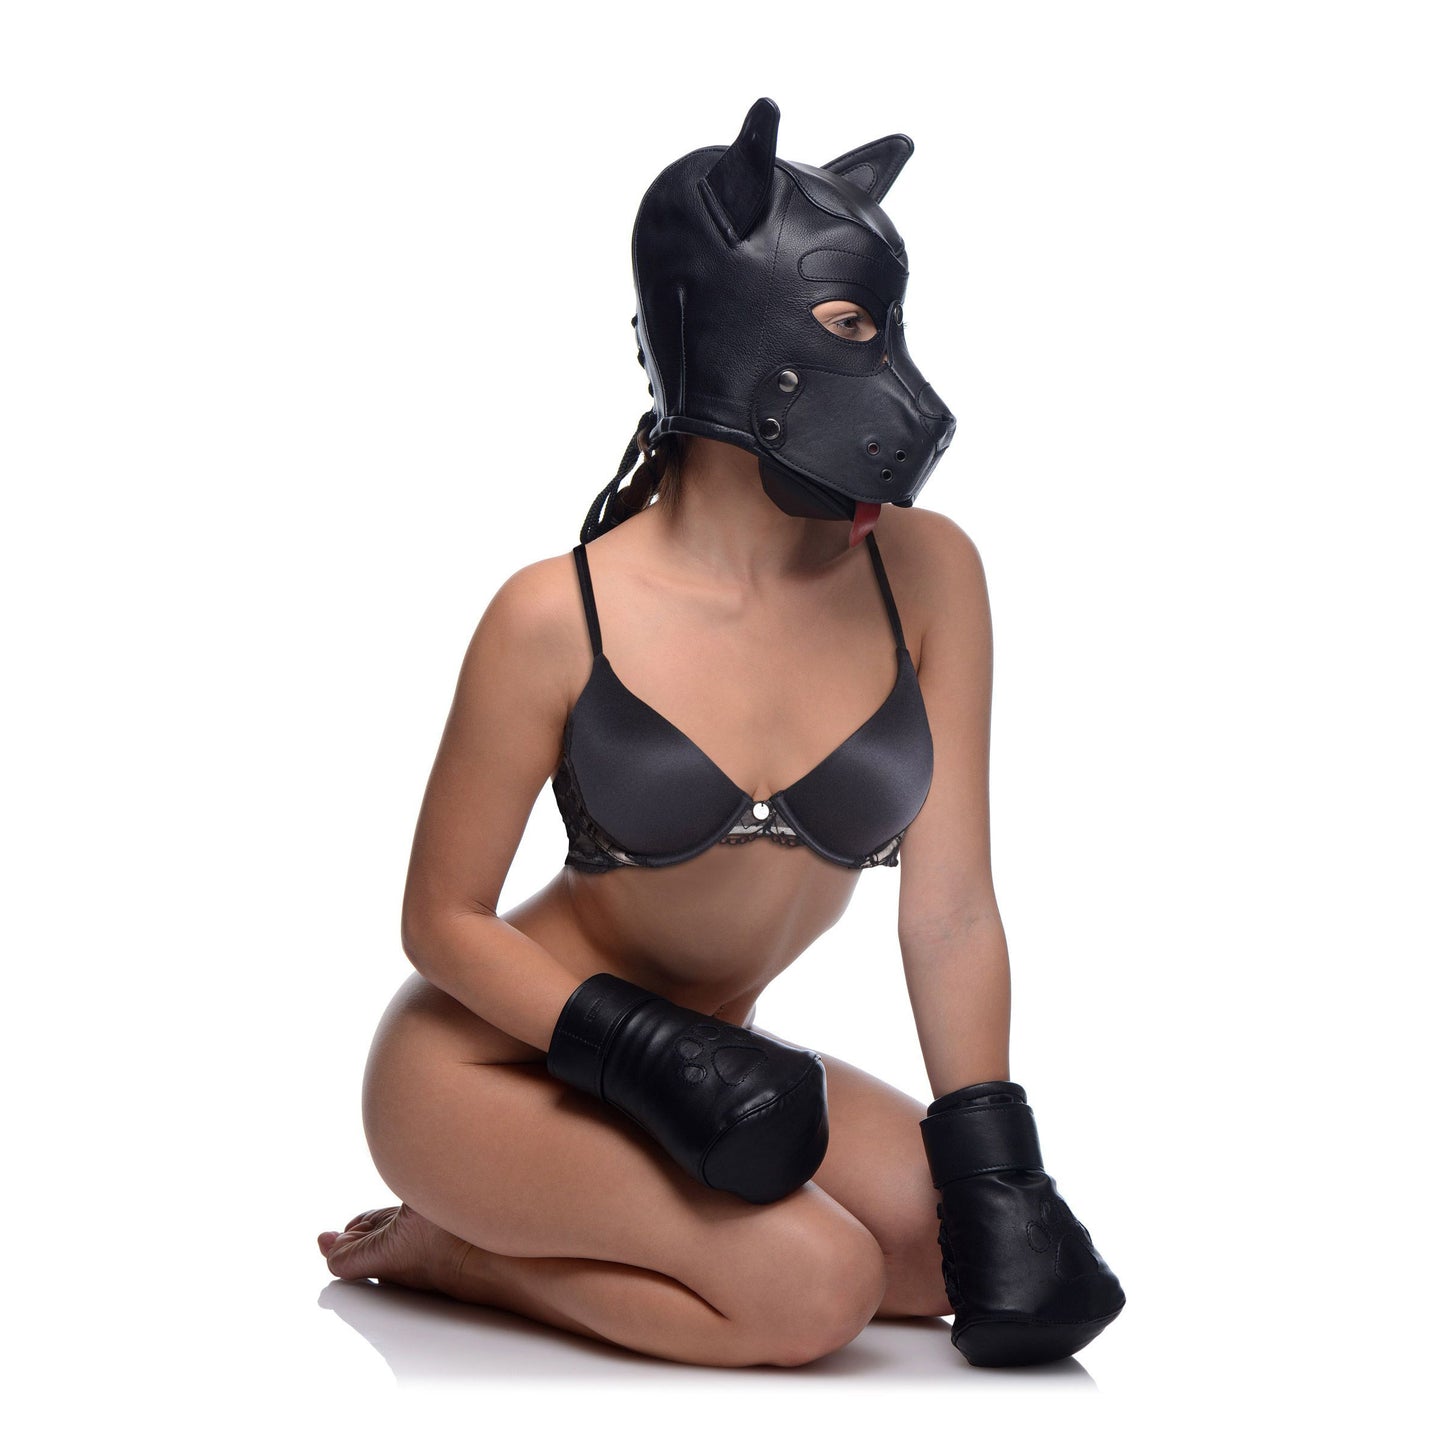 Strict Leather Premium Puppy Play Set - UABDSM